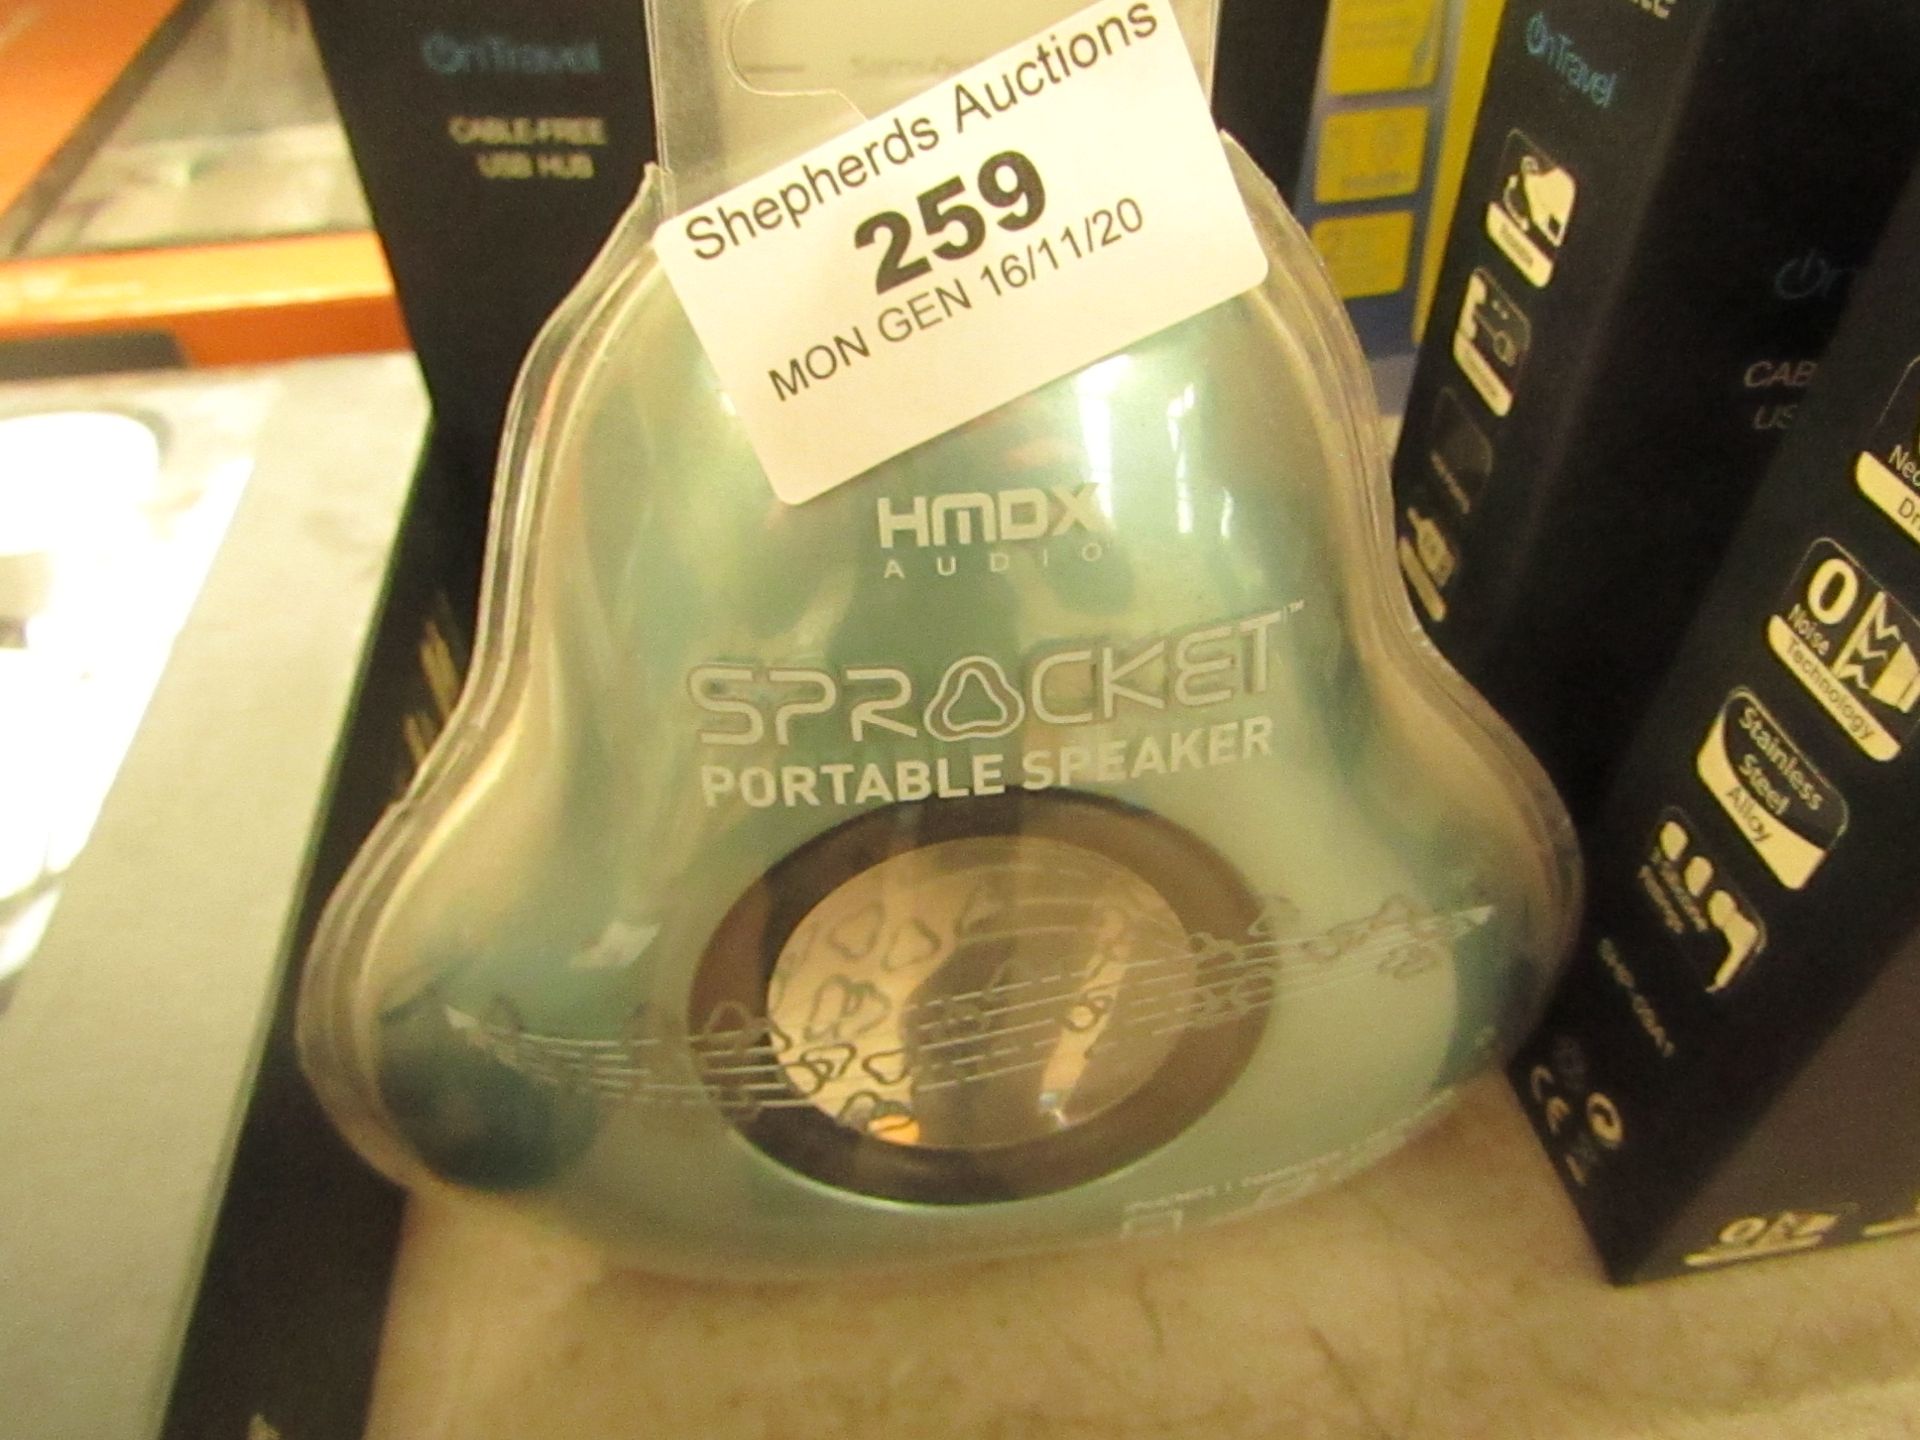 HMDX Audio - Sprocket Portable Speaker - Unused & Packaged.